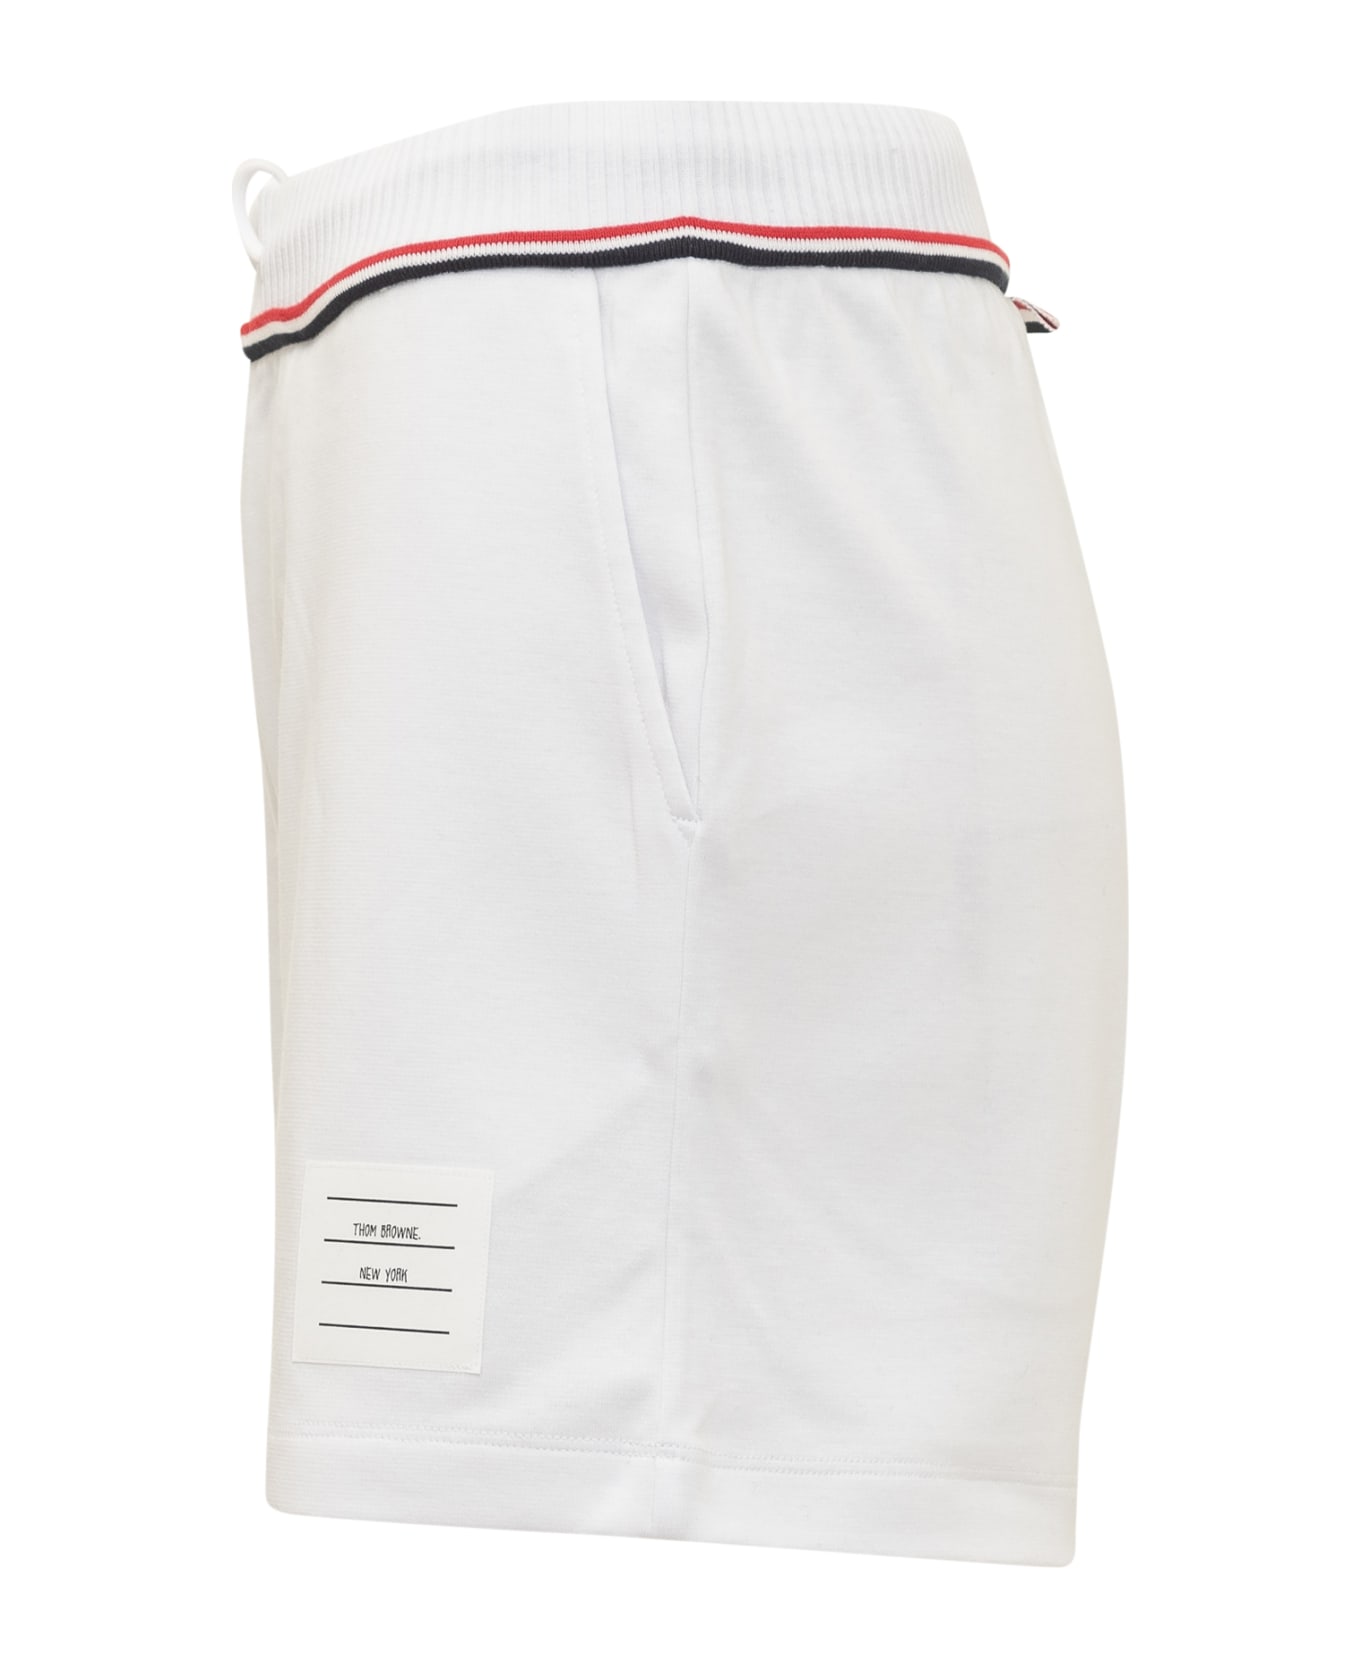 Thom Browne Sweat Shorts - WHITE ショートパンツ